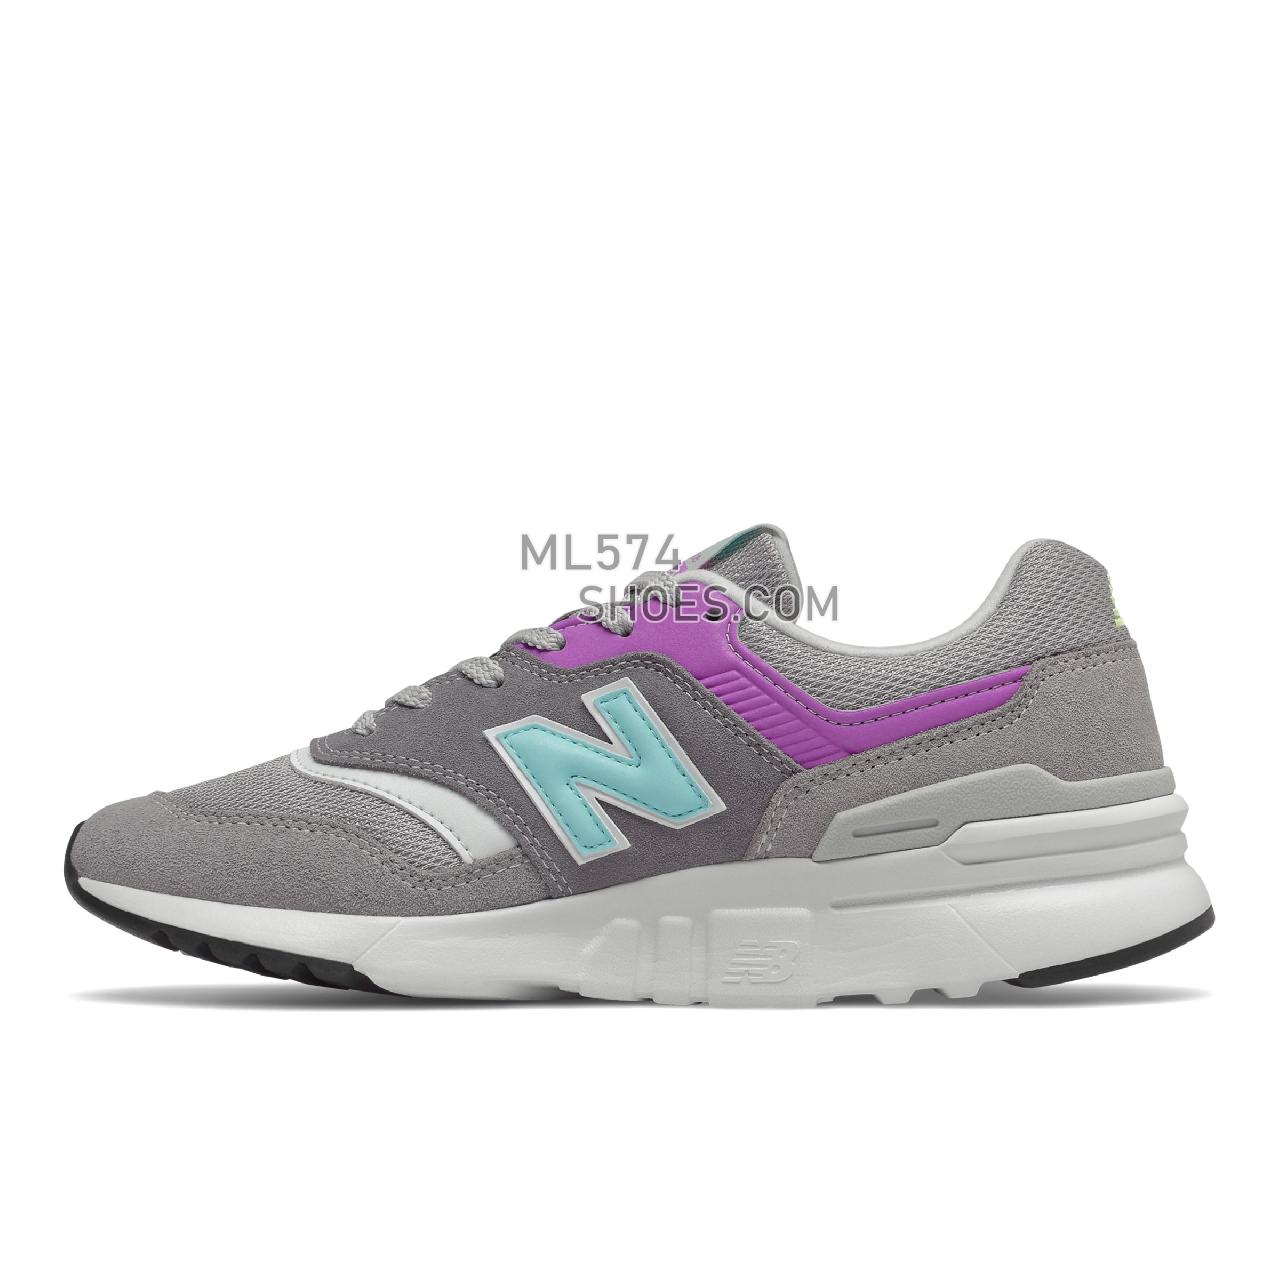 New Balance 997H - Women's Classic Sneakers - Grey with Purple - CW997HVA